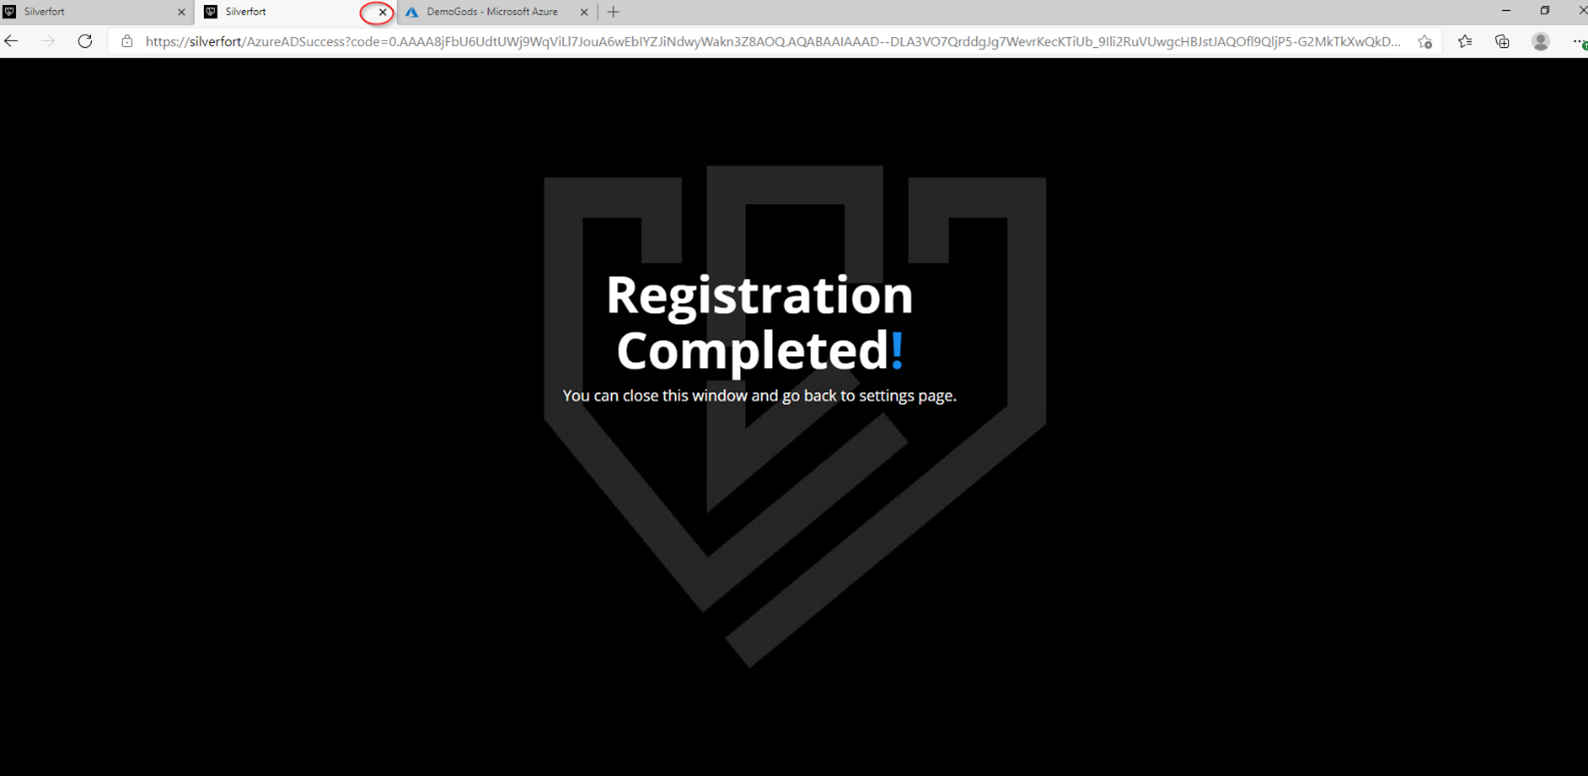 image shows registration completed